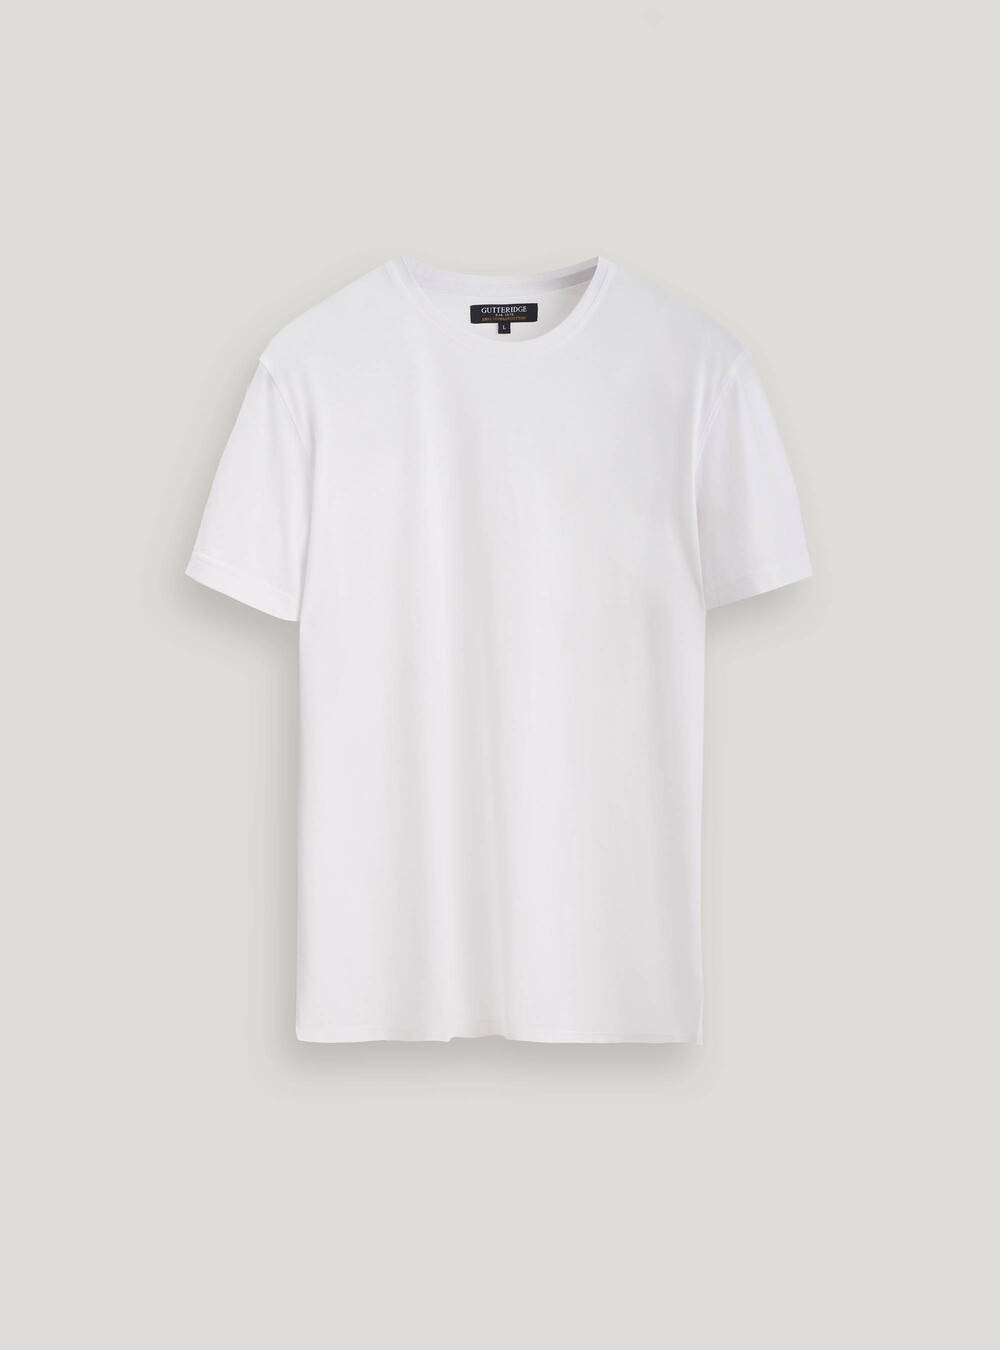 Supima cotton jersey t-shirt, GutteridgeUS